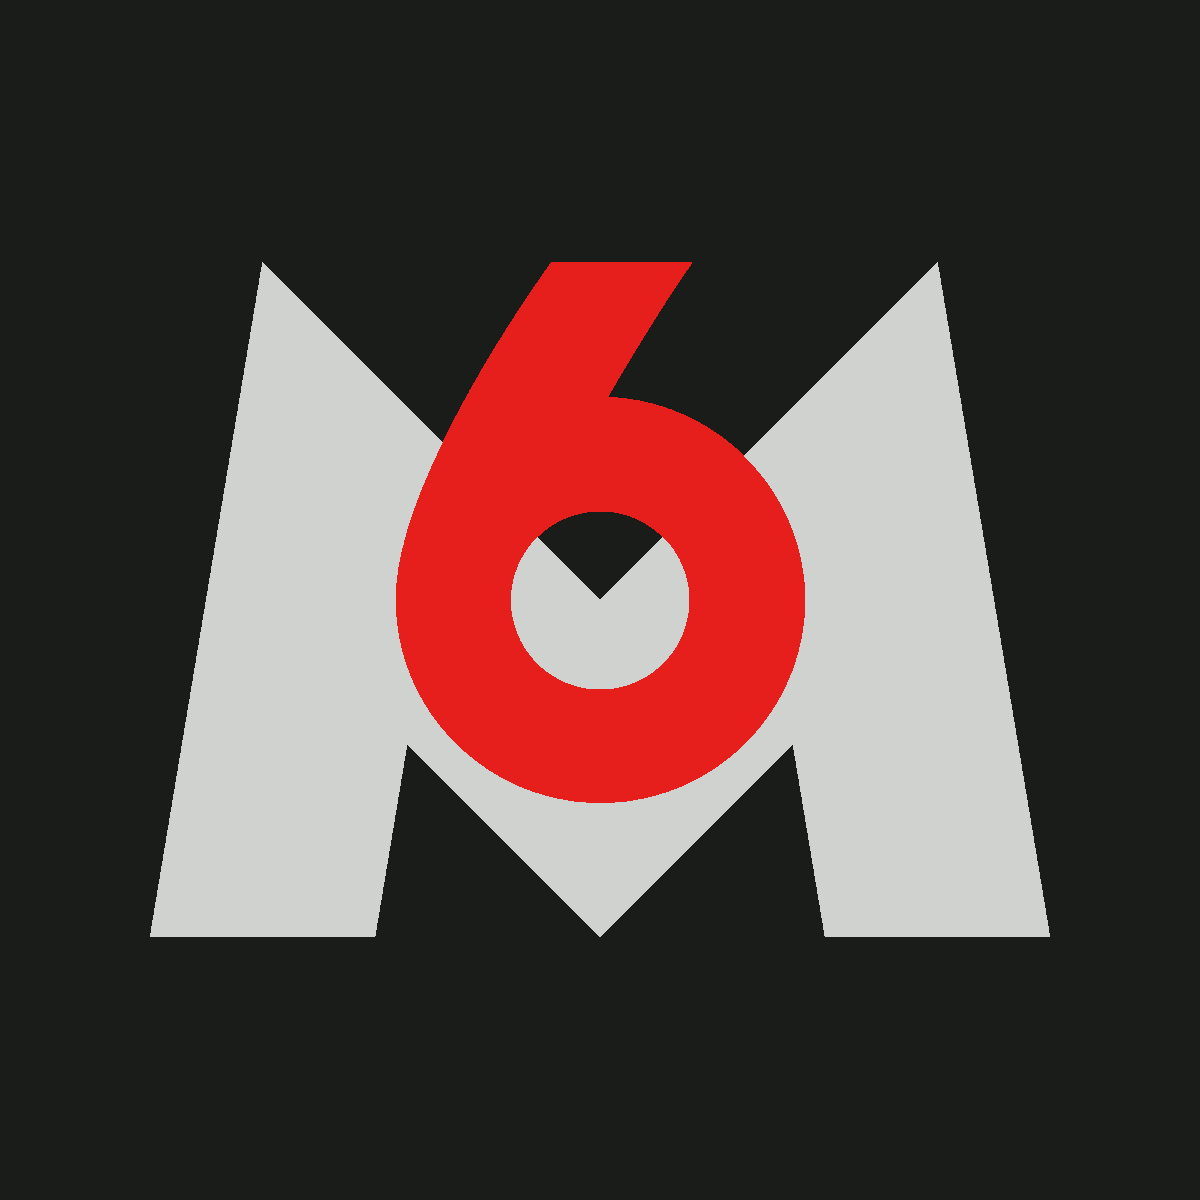 Amedia tv. M6 (Телеканал). M6 канал Франция. М6 Телеканал. M6 логотип.